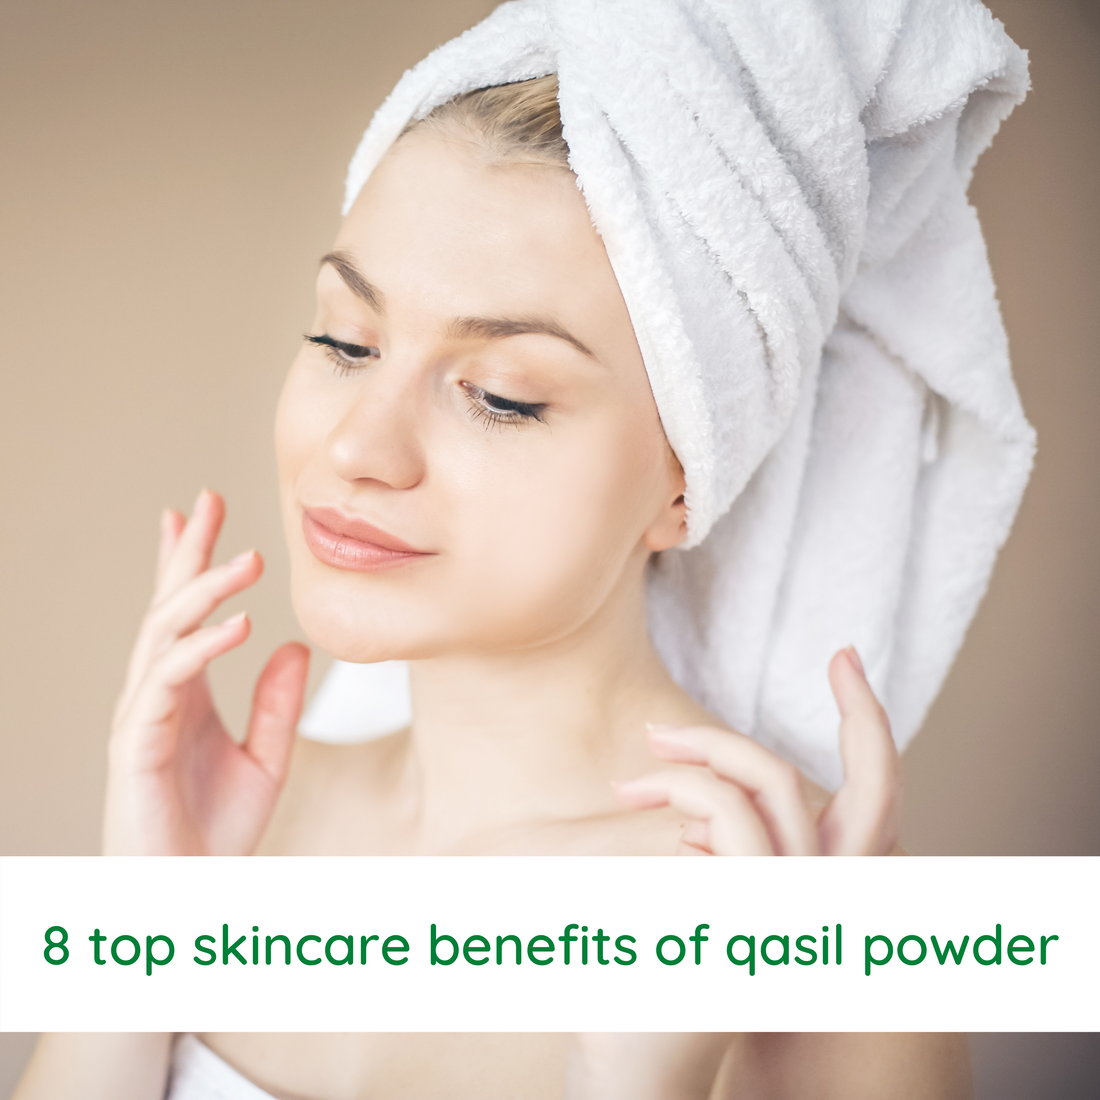 8 top skincare benefits of qasil powder